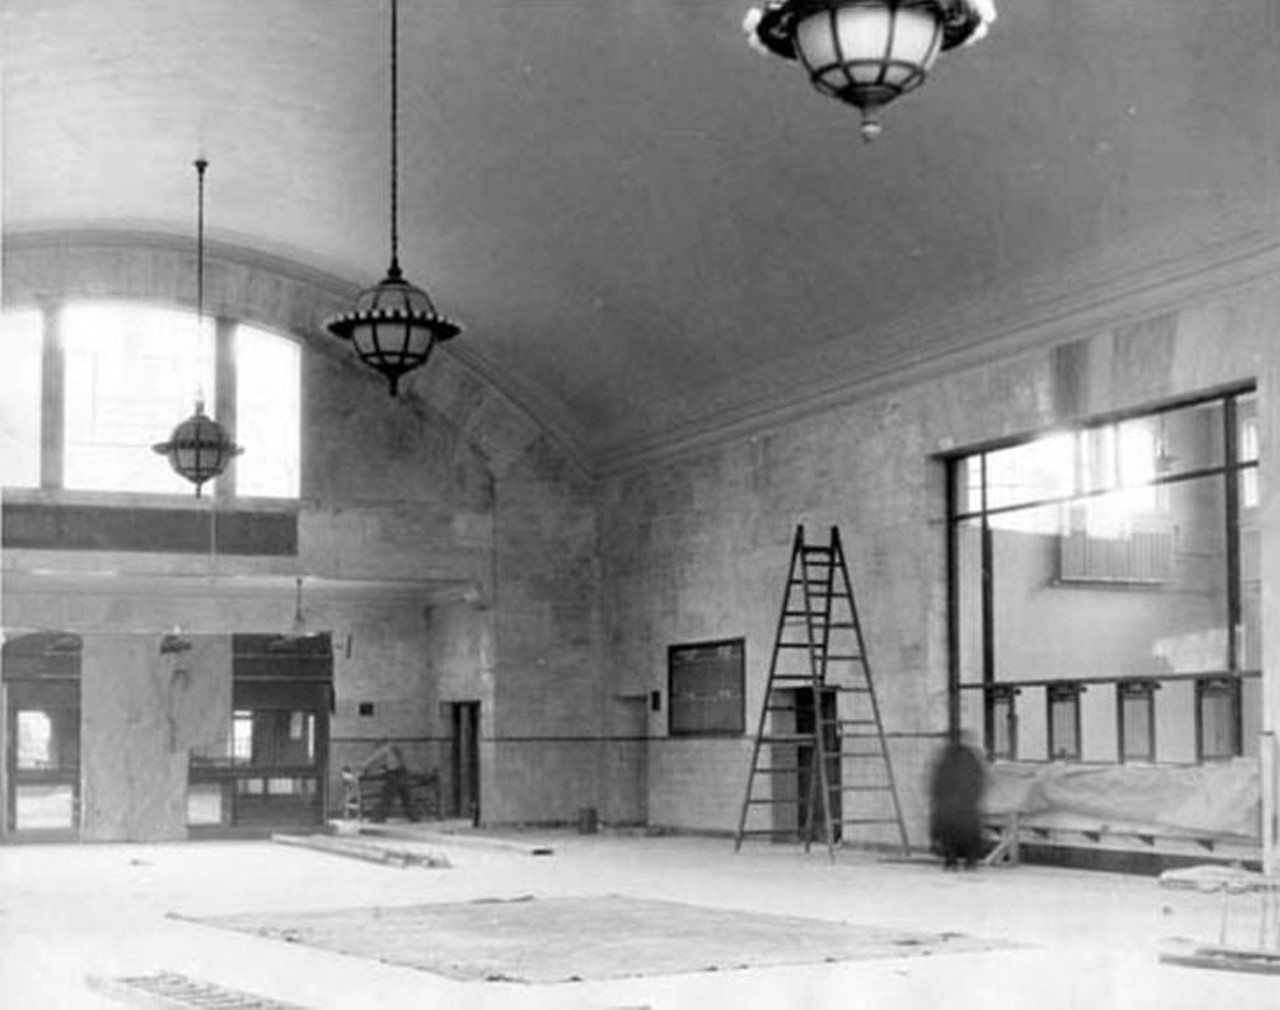  Railroad Station Interior, 1930 